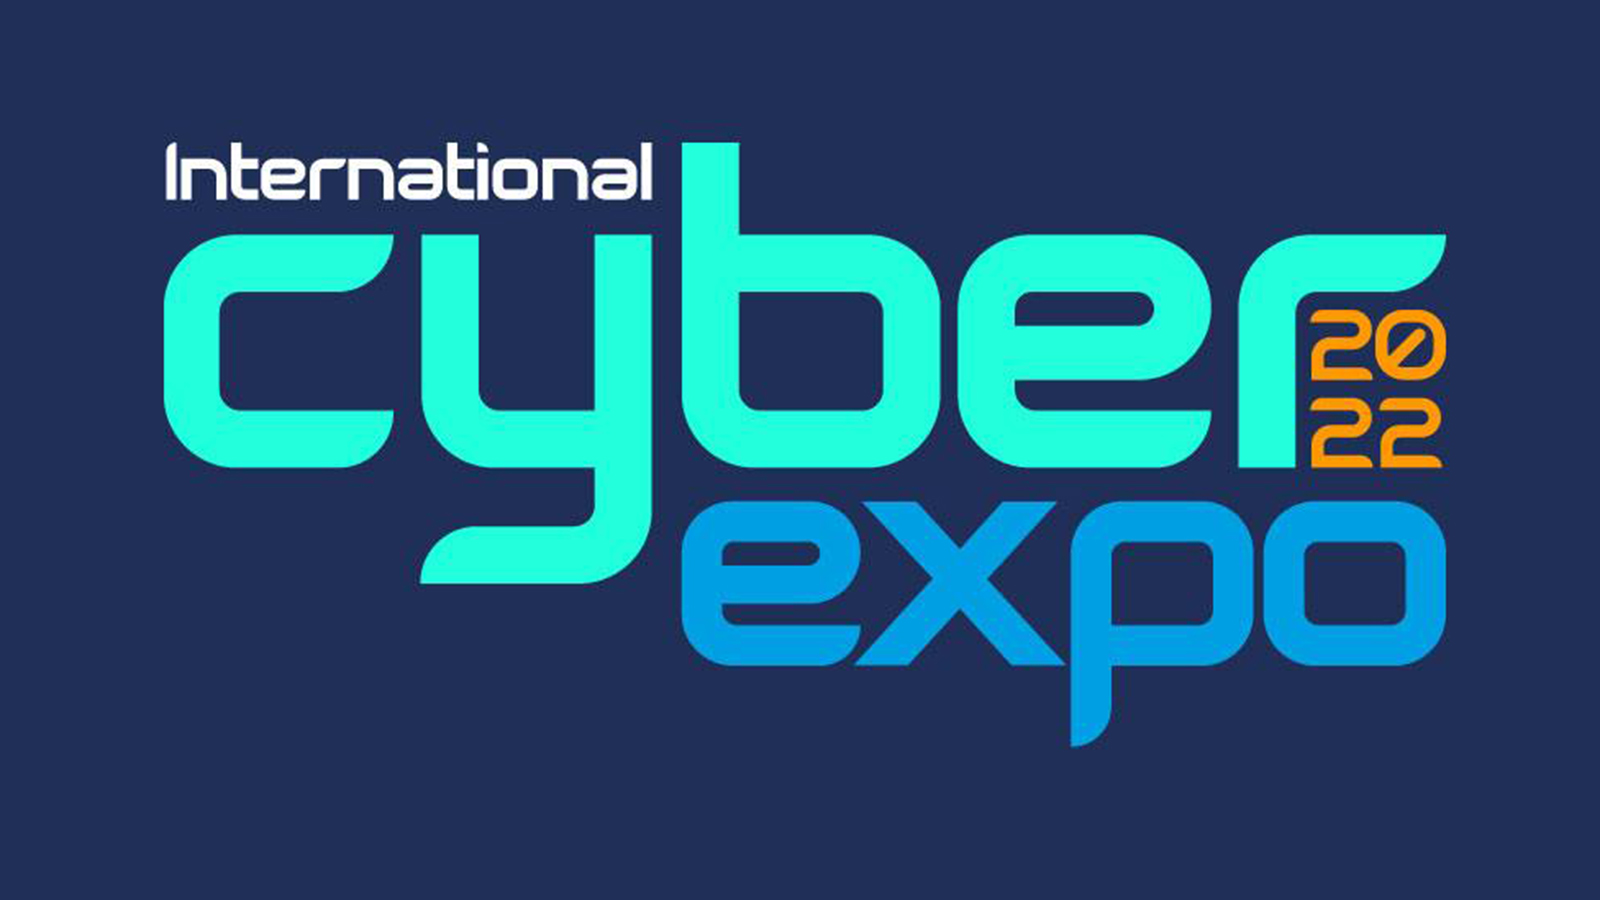 international-cyber-expo-2023-color-logo-dark-background